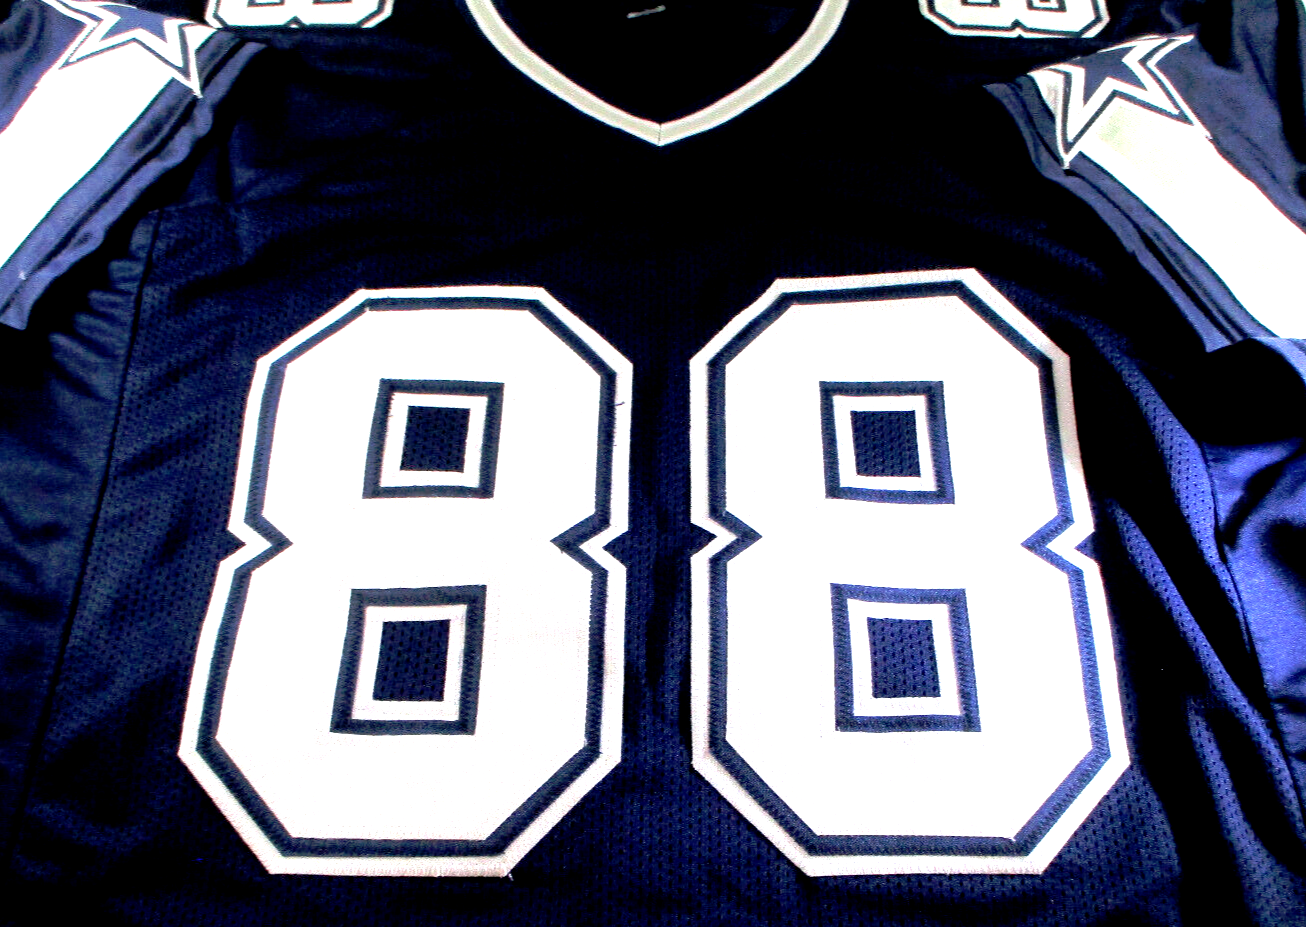 Ceedee Lamb Autographed Dallas Cowboys Blue Custom Football Jersey / C.O.A.